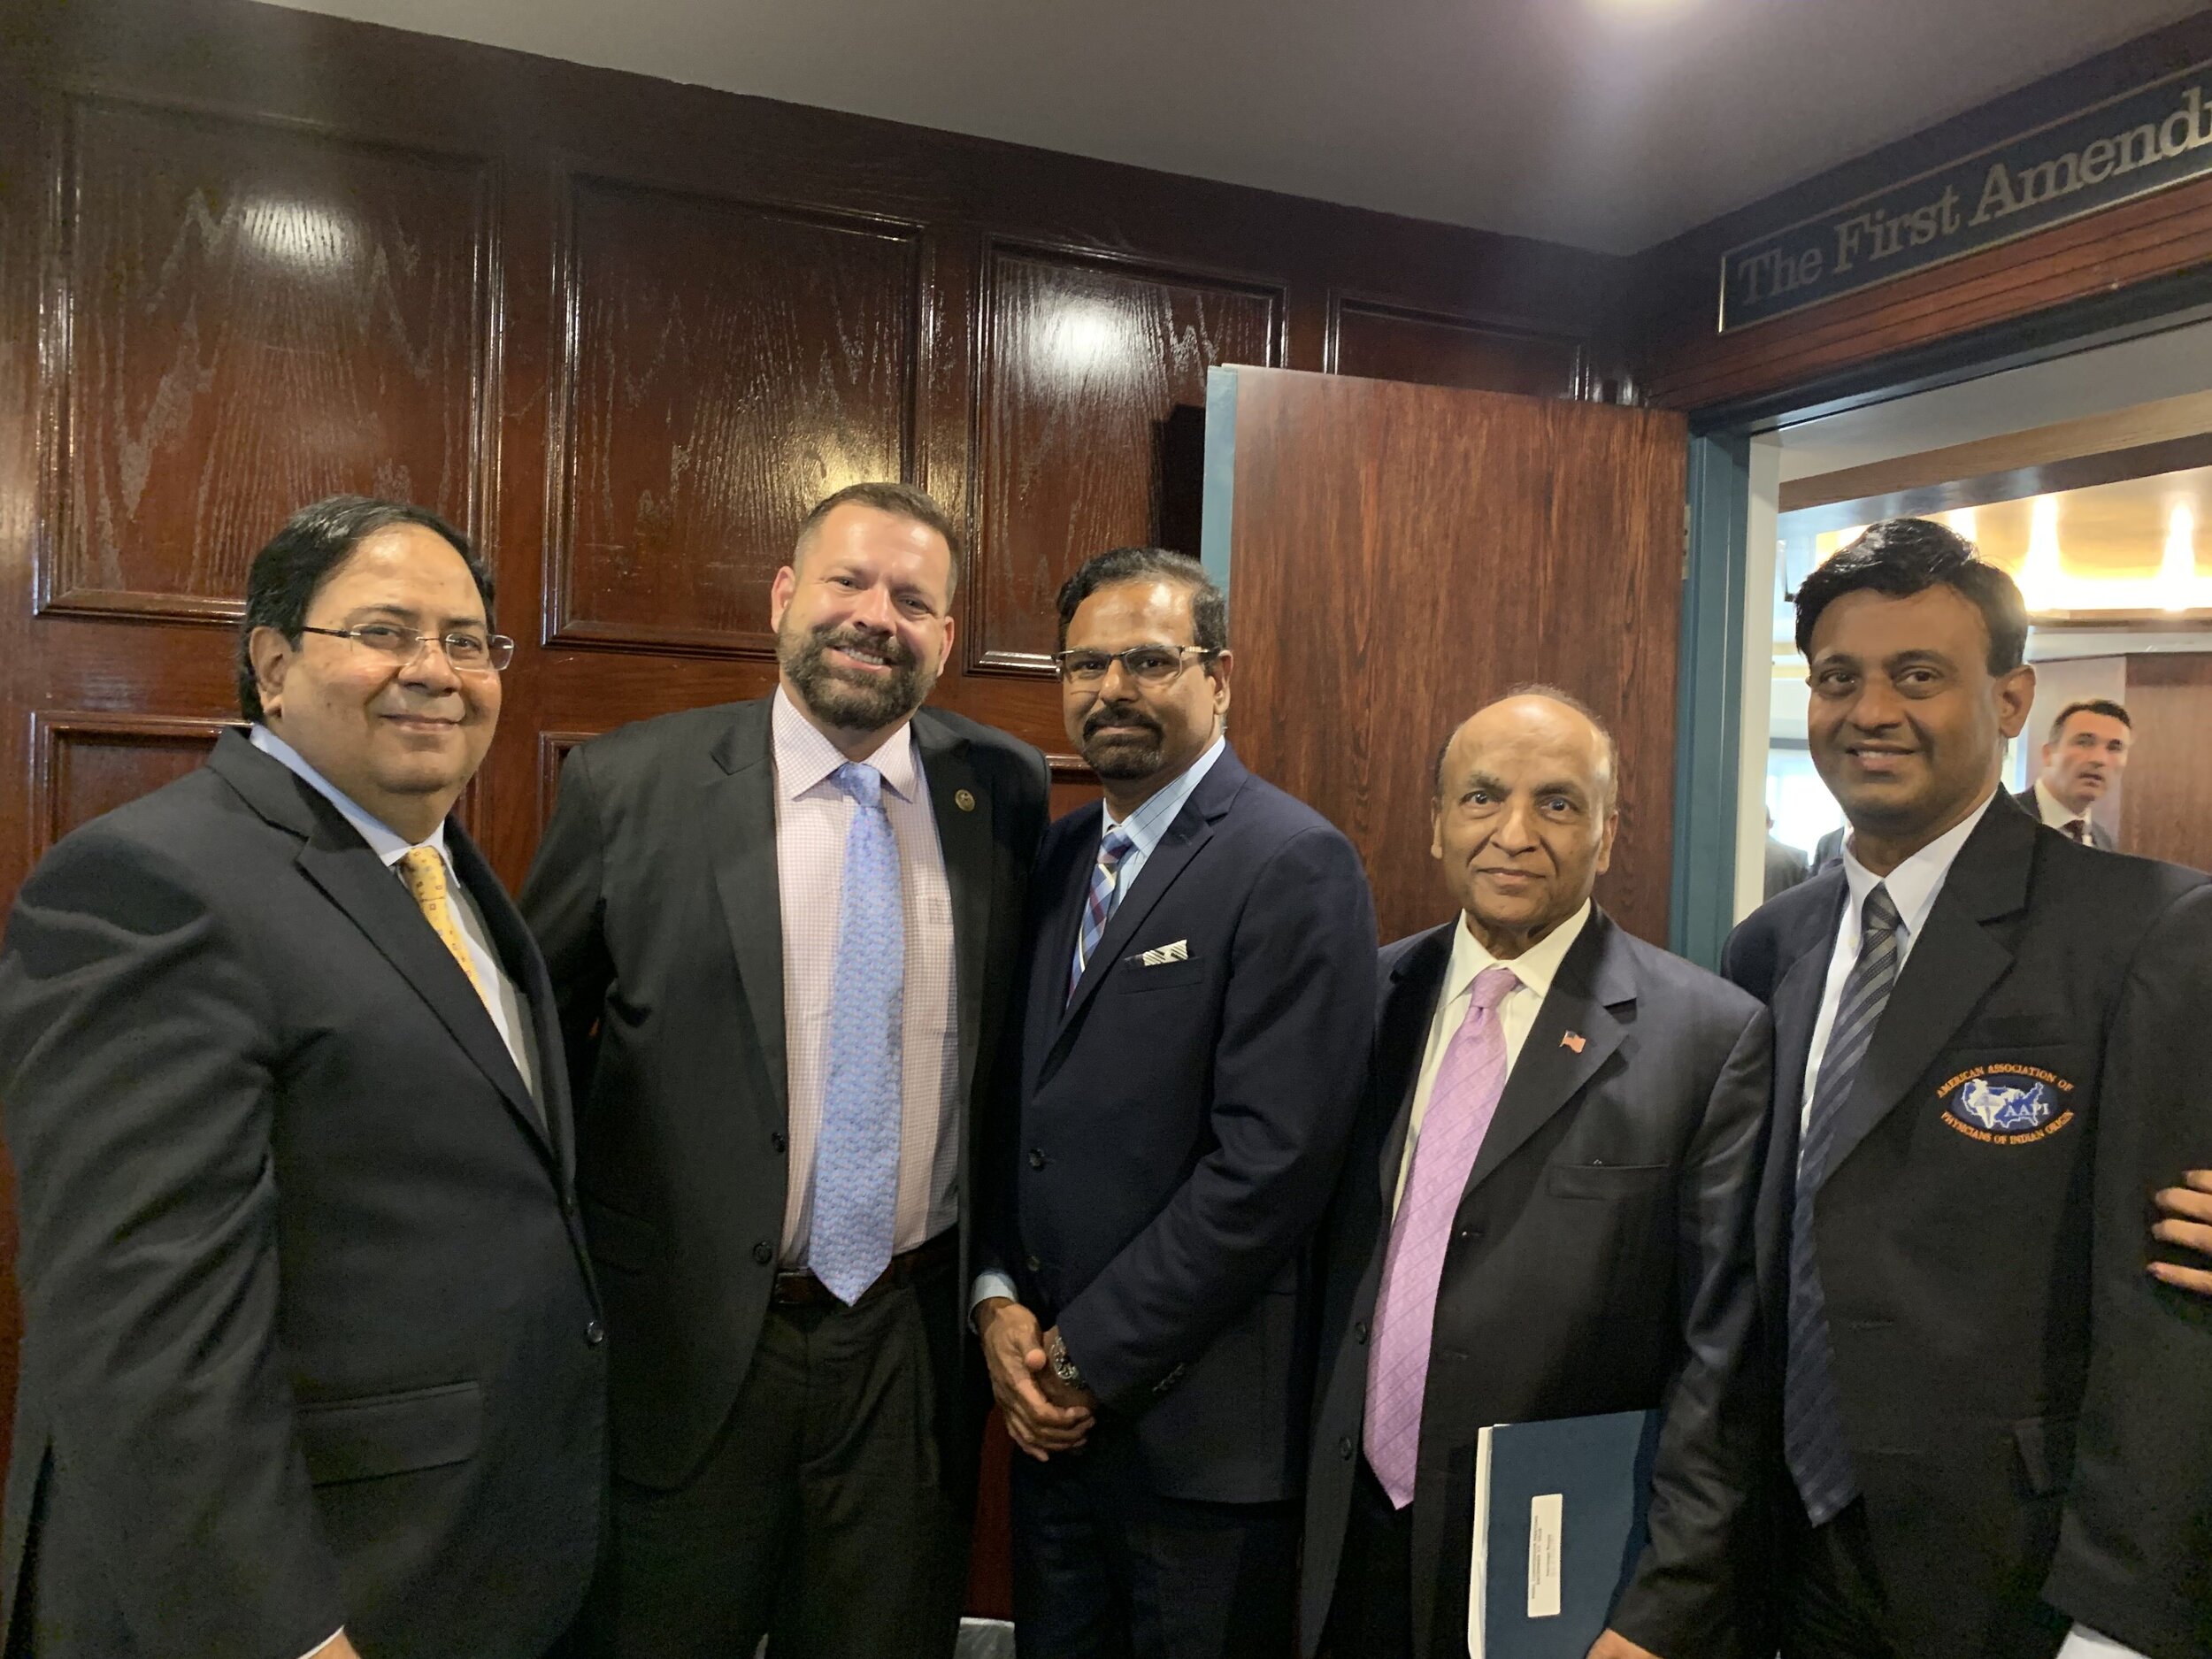   From Left to Right : Mr. Suresh Nichani, Tom Garrett (Former US Congressman), Dr. Ravi Kolli (Secretary of American Association of Physicians of Indian Origin) and Dr. Suresh Reddy (President of American Association of Physicians of Indian Origin) 